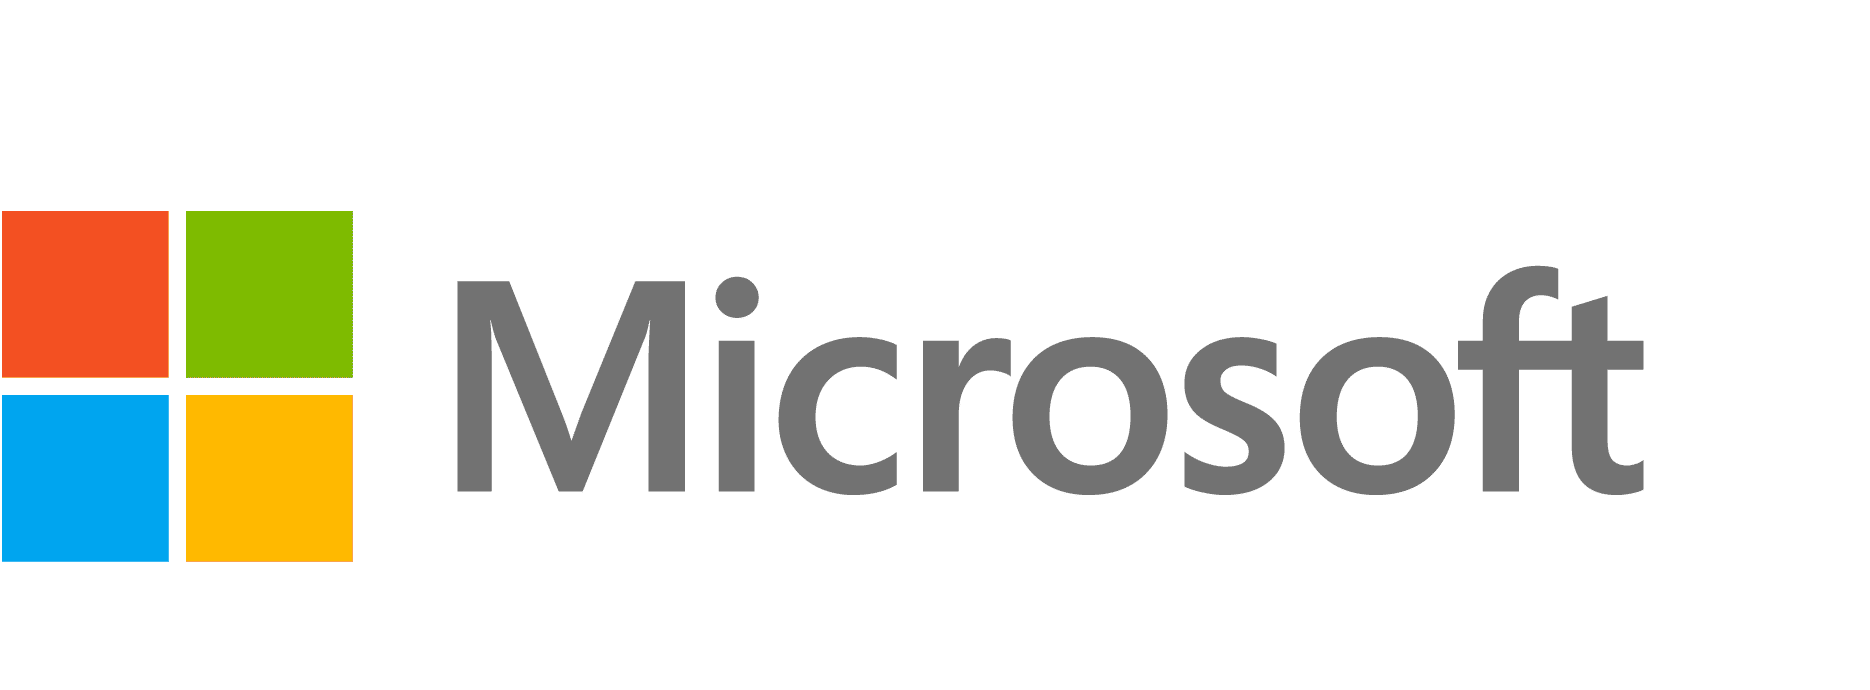 Microsoft-Logo-PNG-1